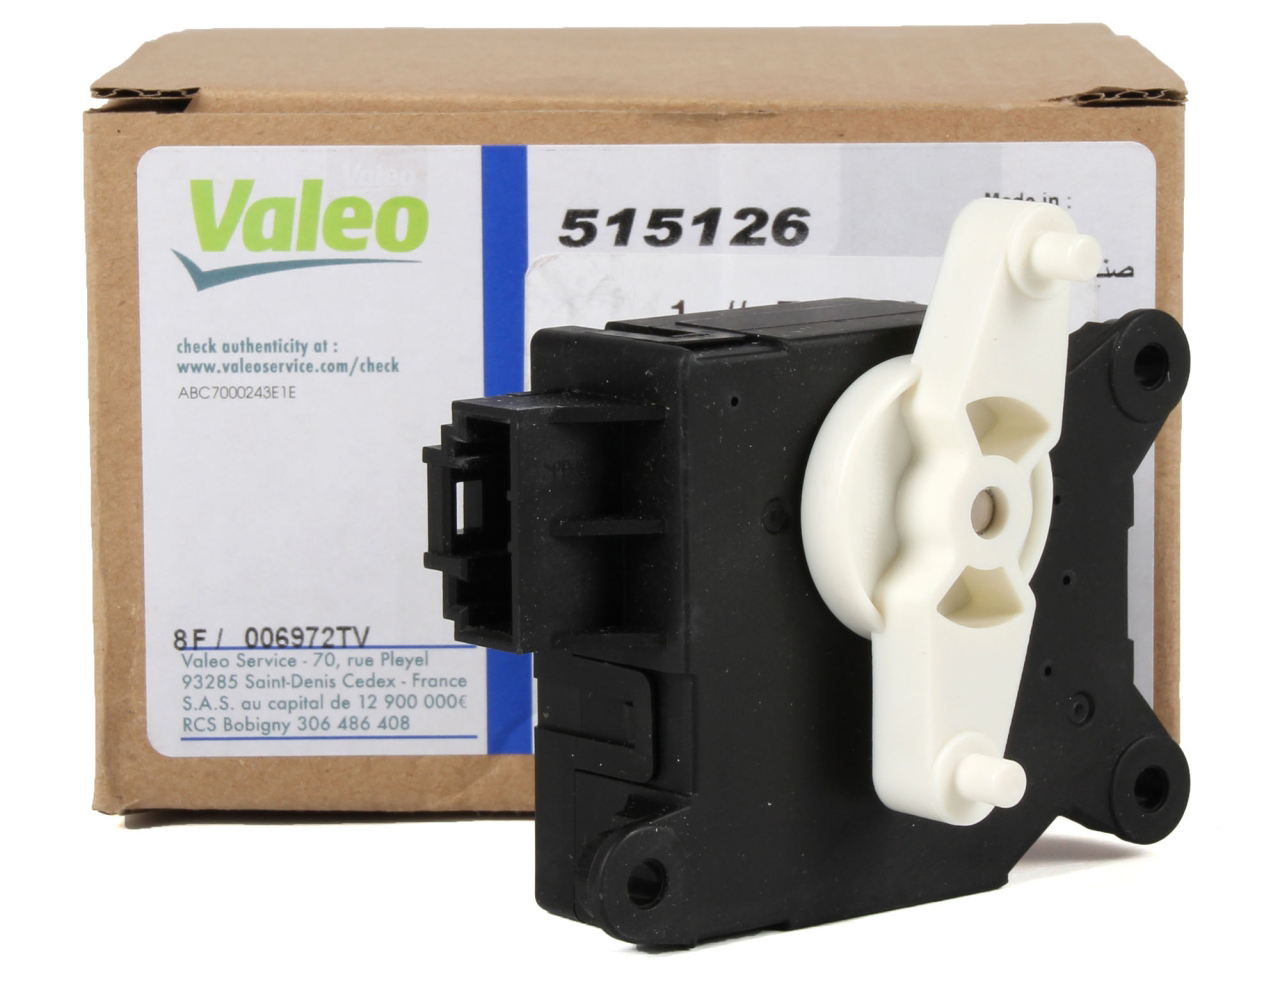 Valeo control valve mixing valve 515126 Opel Vectra C with cardboard box